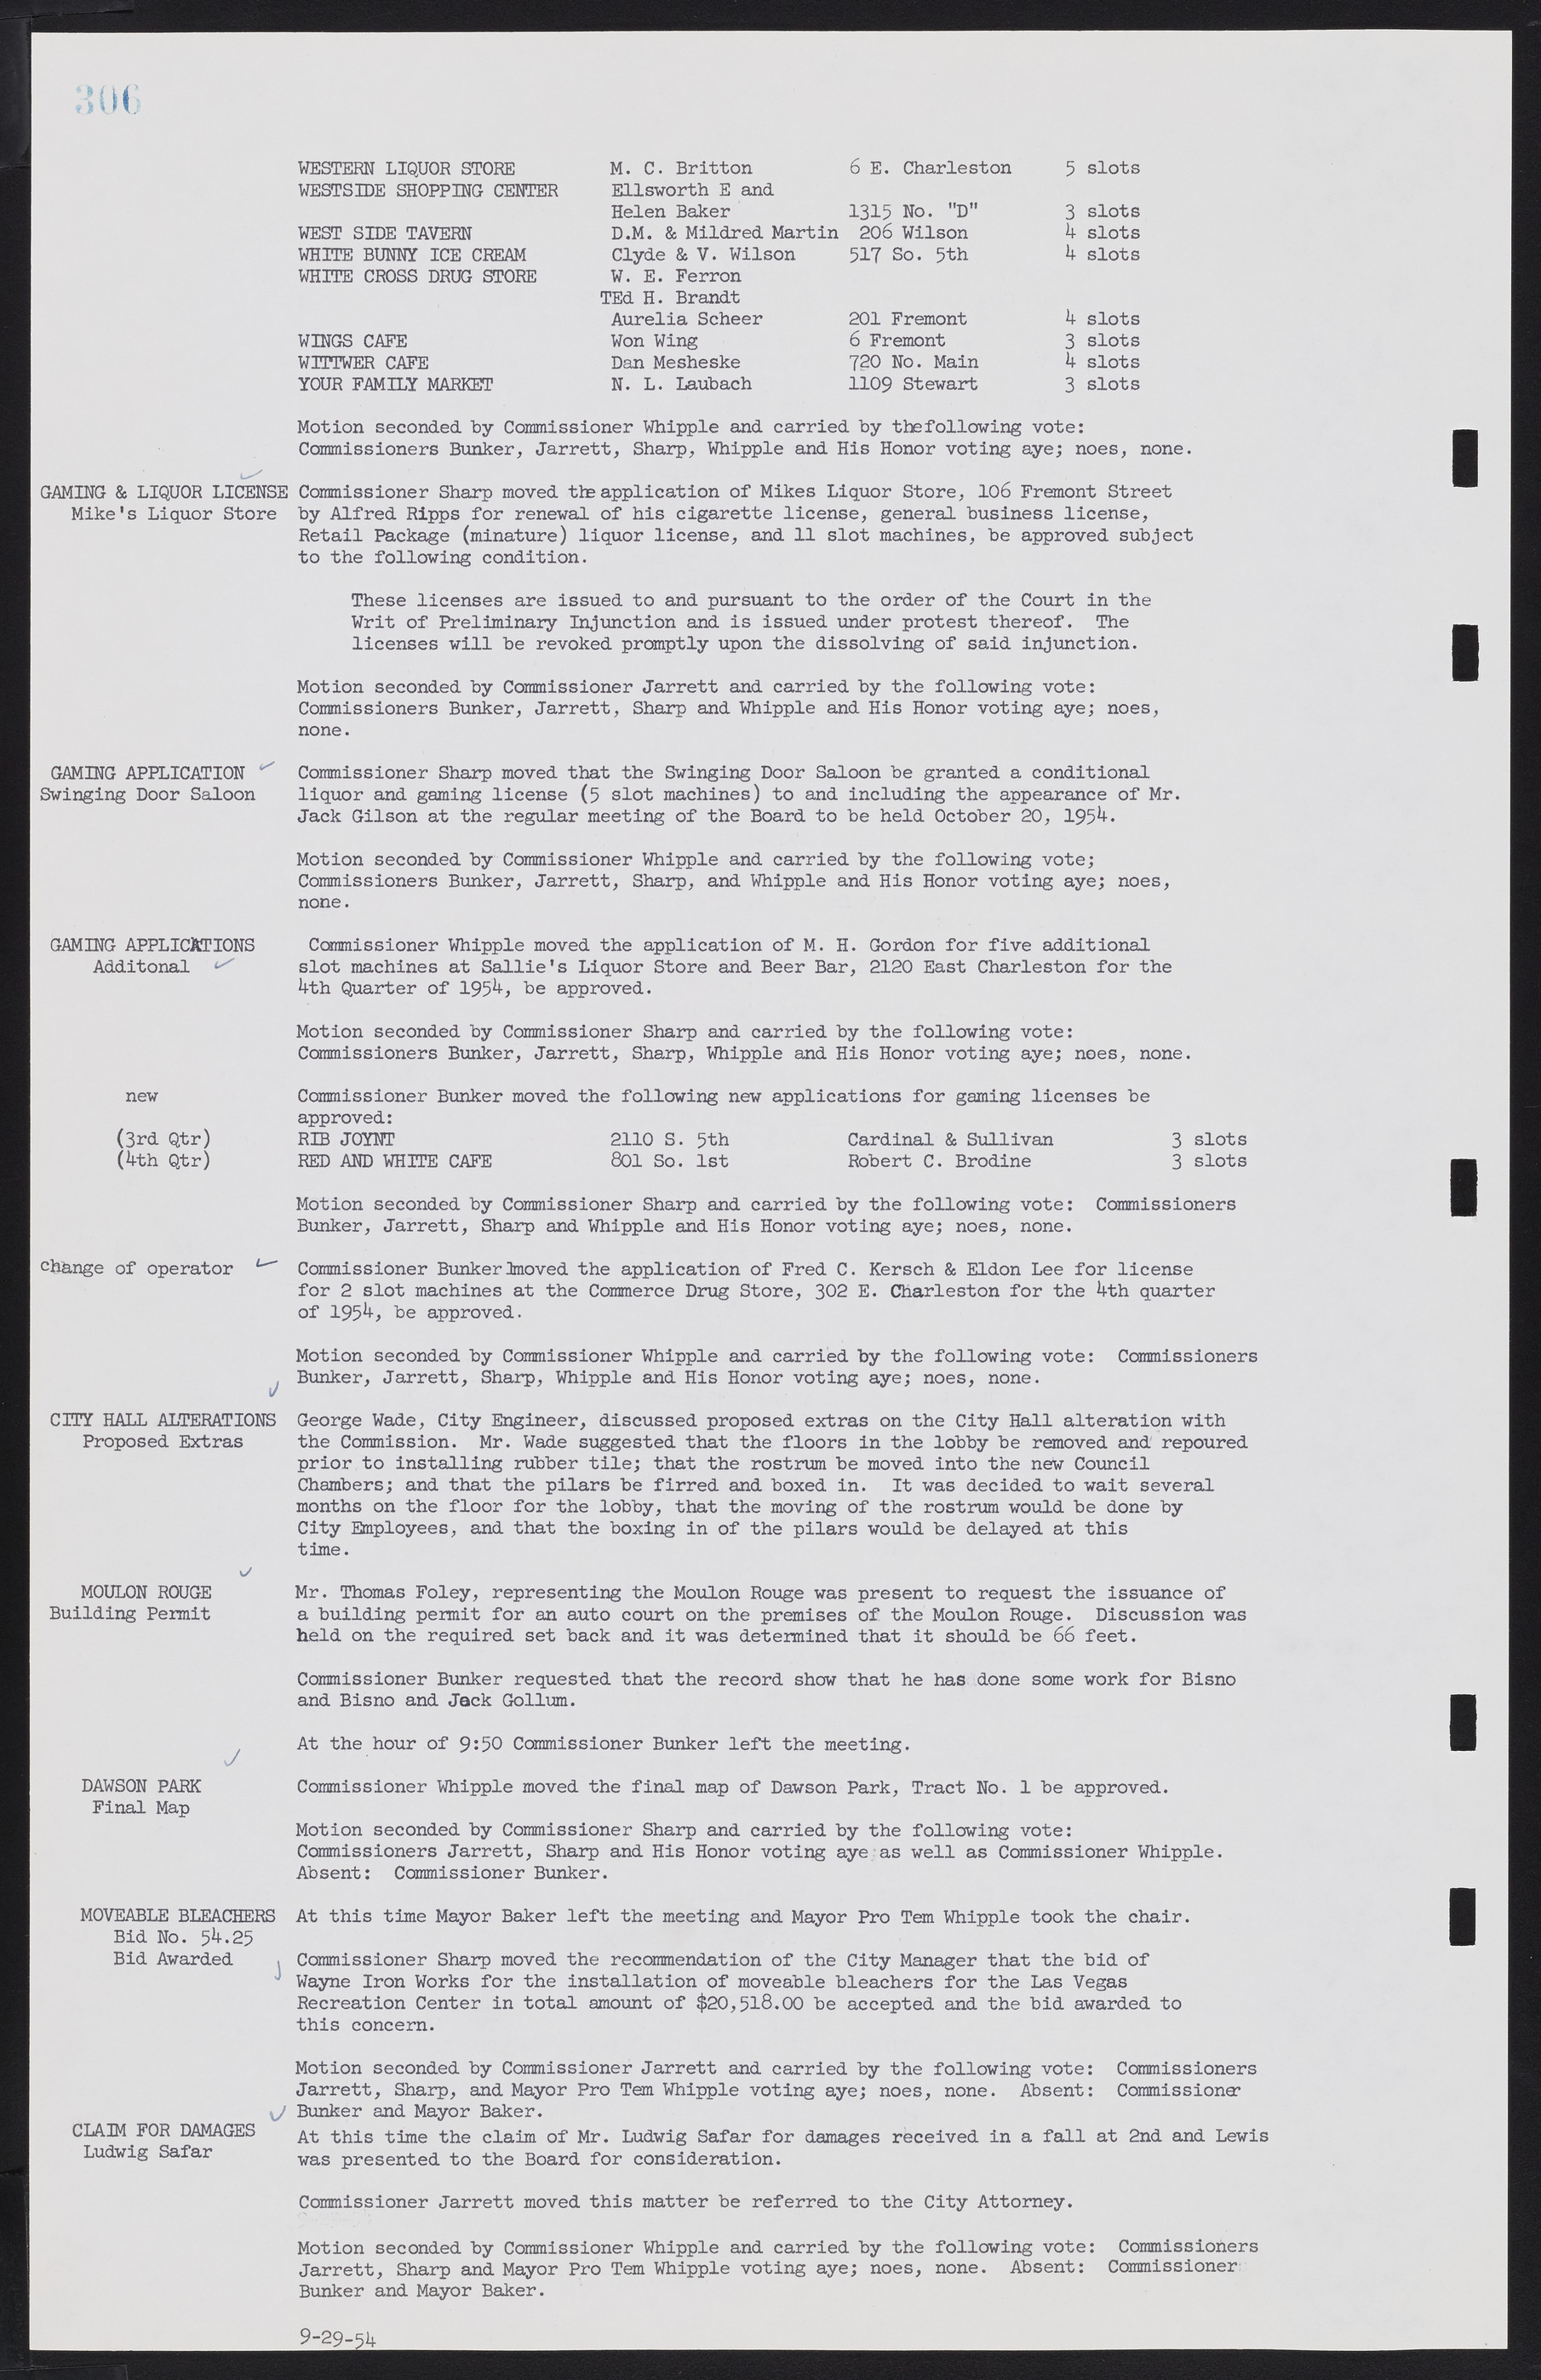 Las Vegas City Commission Minutes, February 17, 1954 to September 21, 1955, lvc000009-312